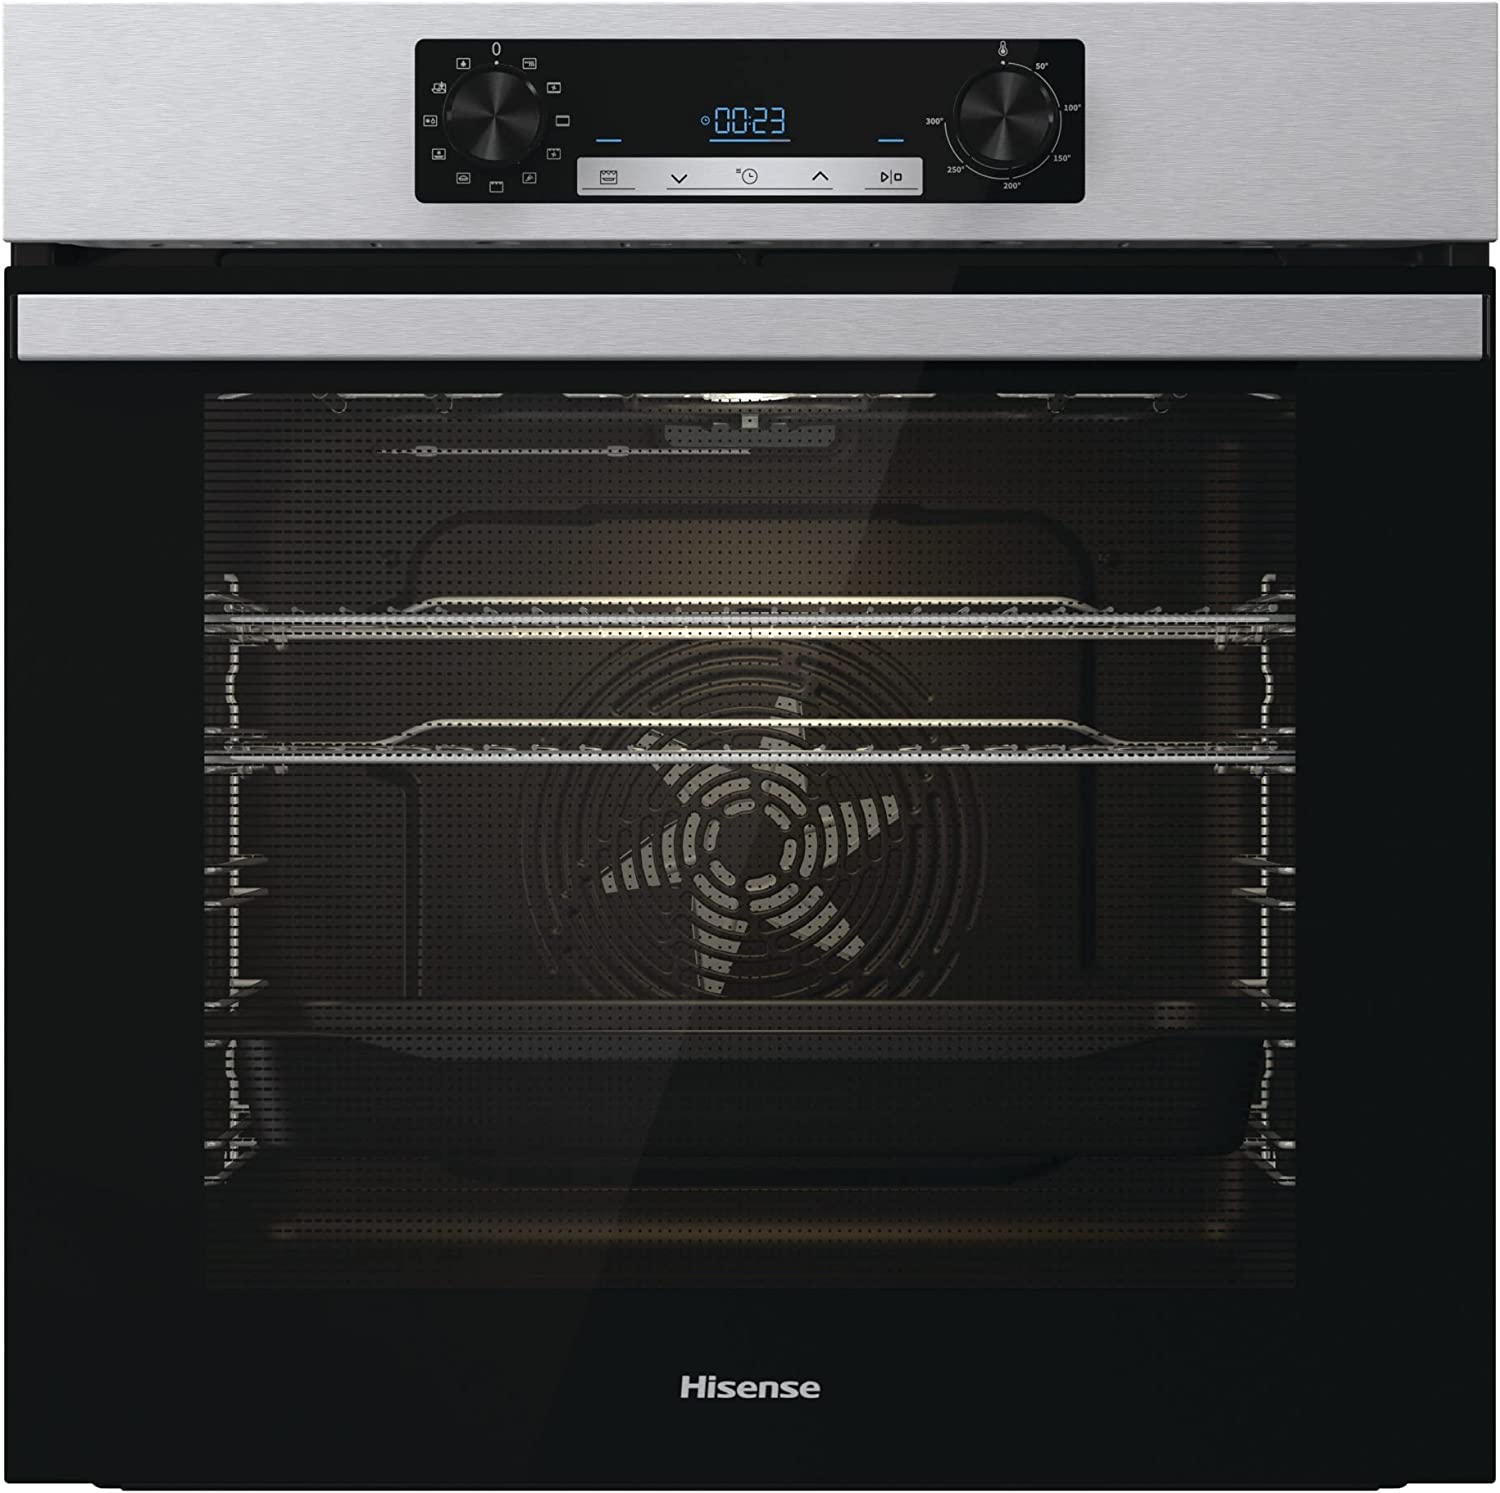 Hisense BSA5221 Built In oven